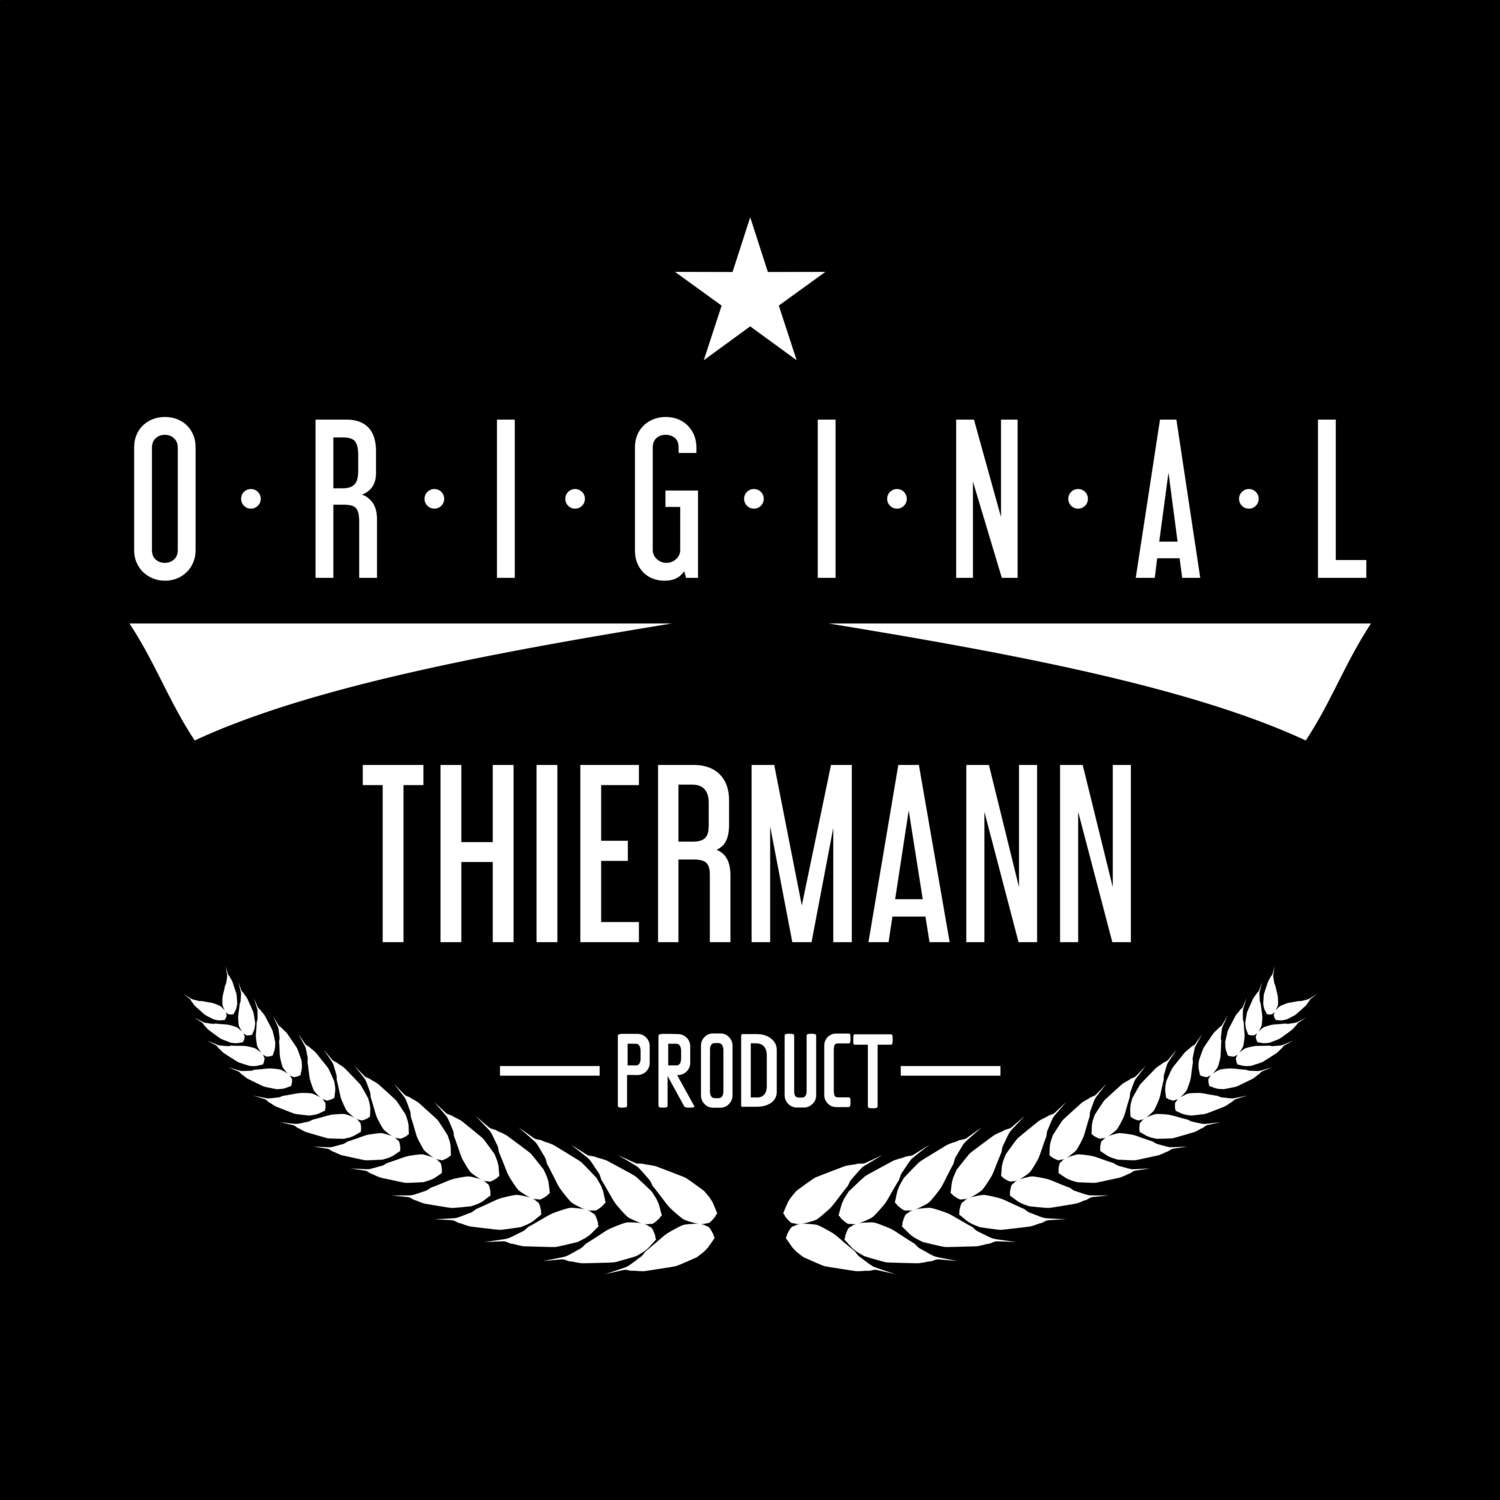 Thiermann T-Shirt »Original Product«